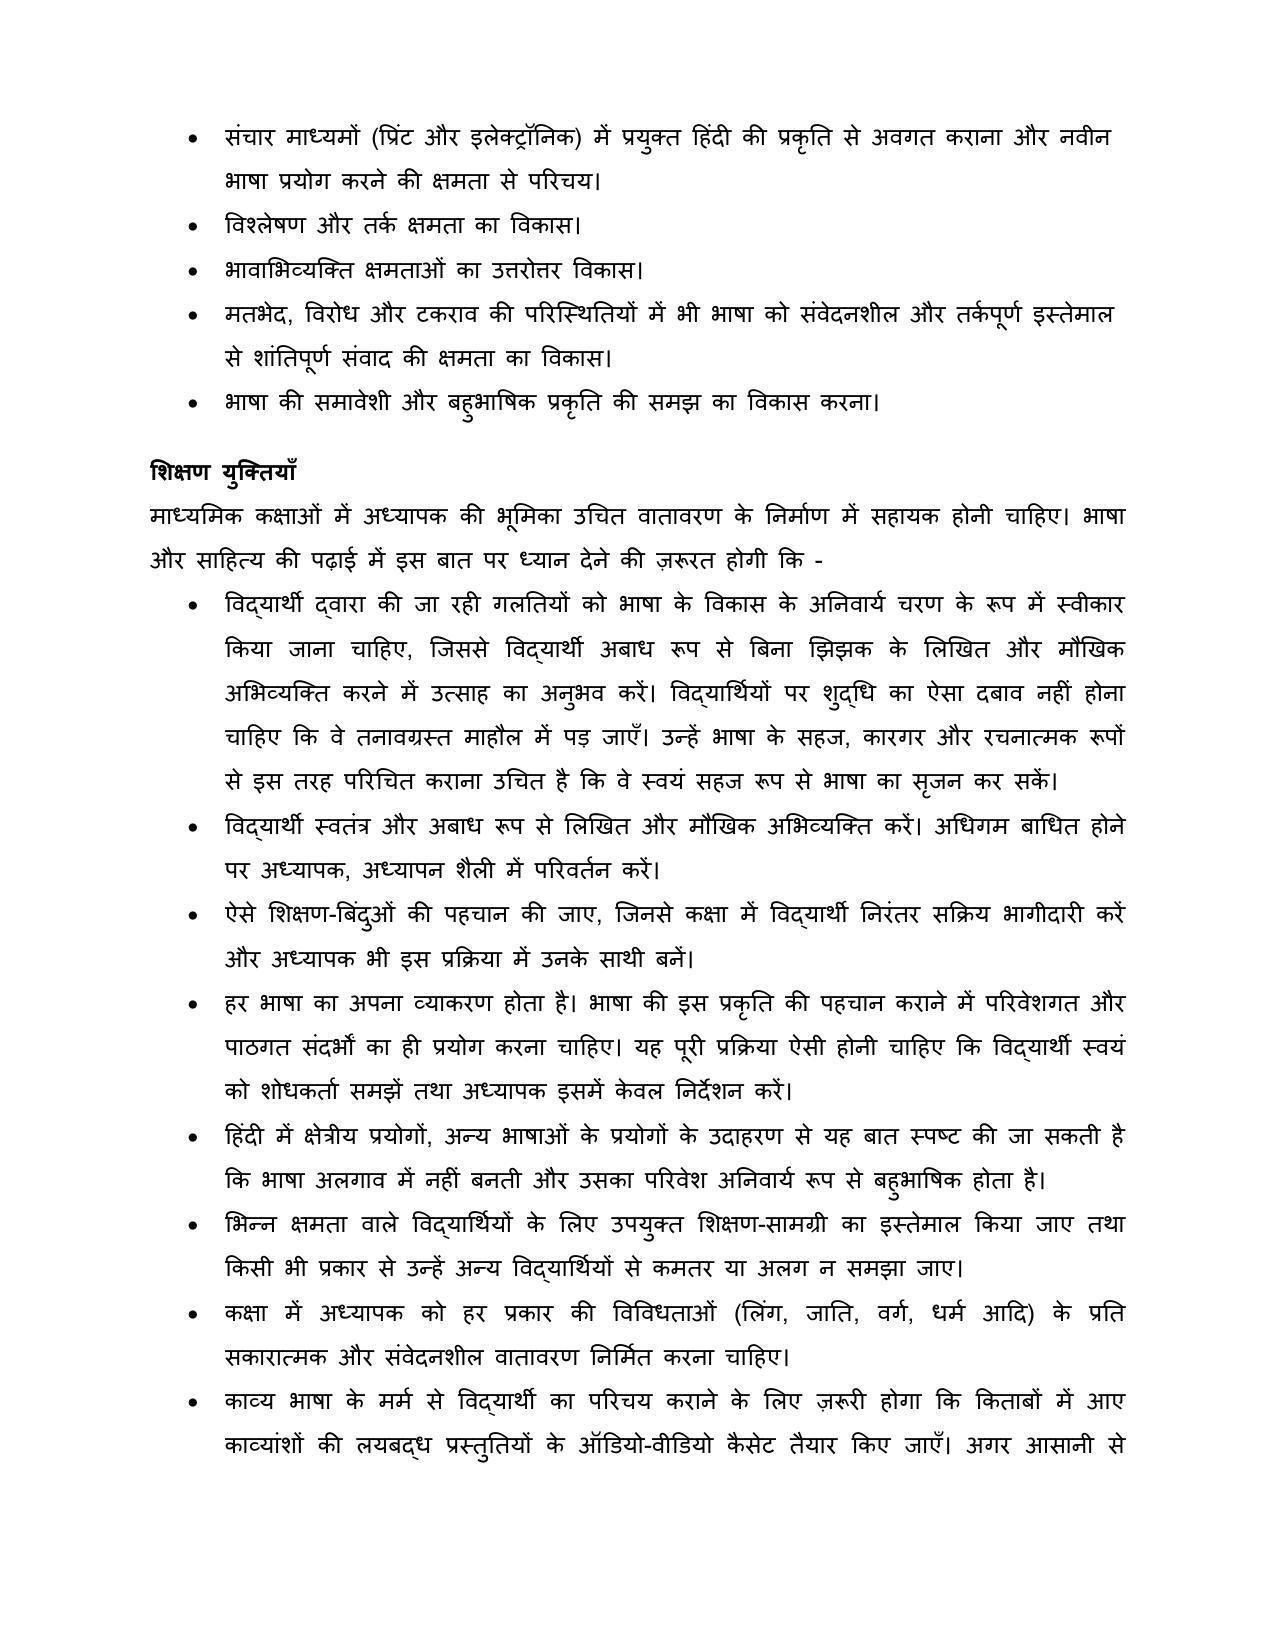 CBSE Class 9 & 10 Syllabus 2022-23 - Hindi course- A - Page 3